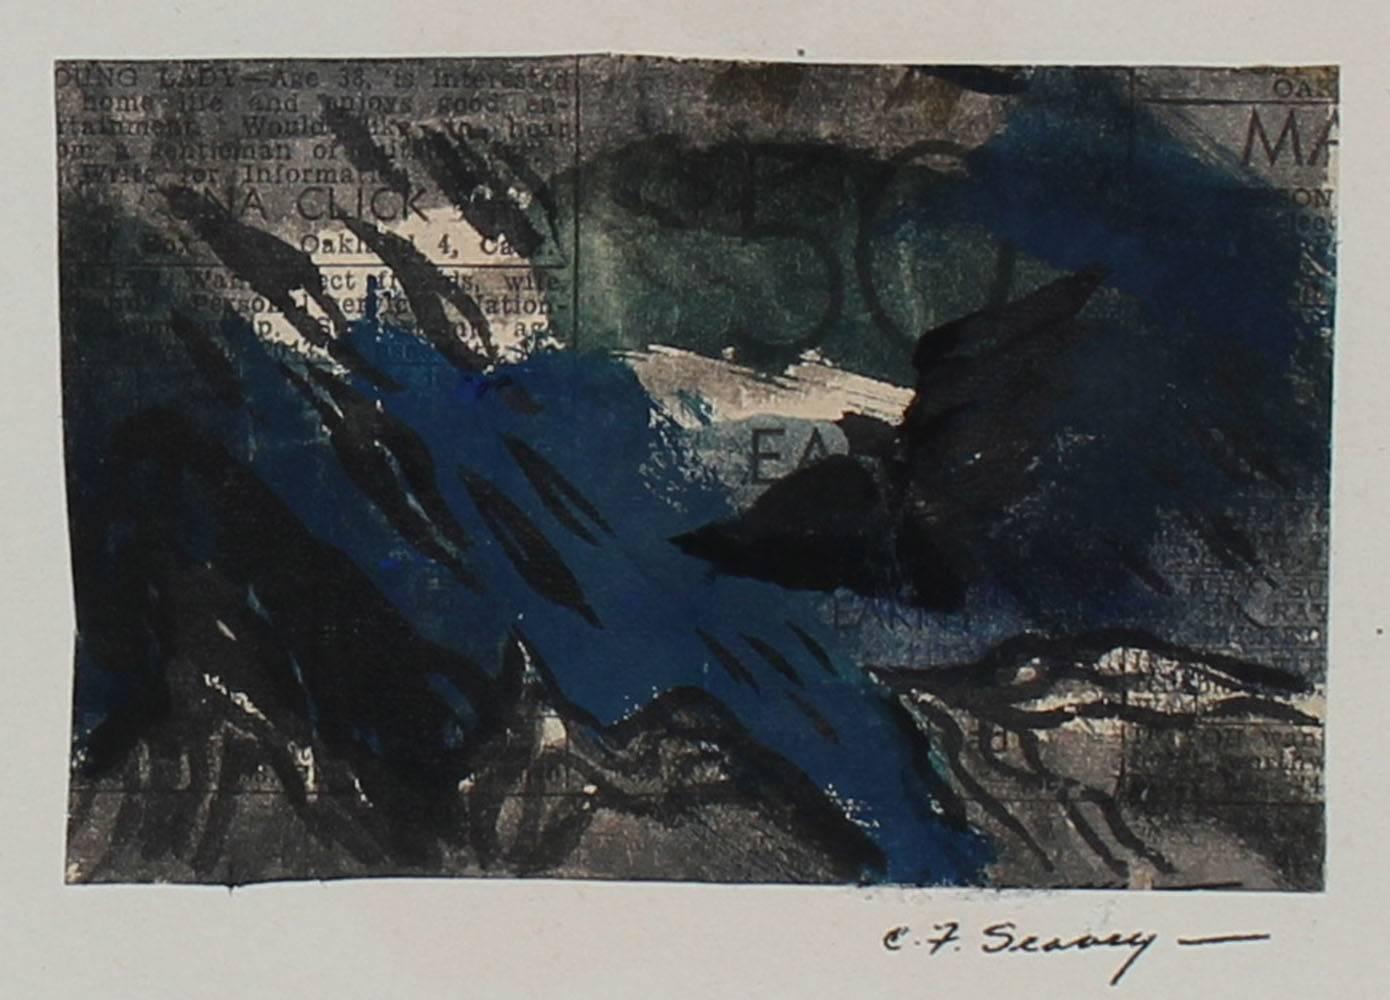  Abstract in Blue, Gouache on Newsprint, 1946